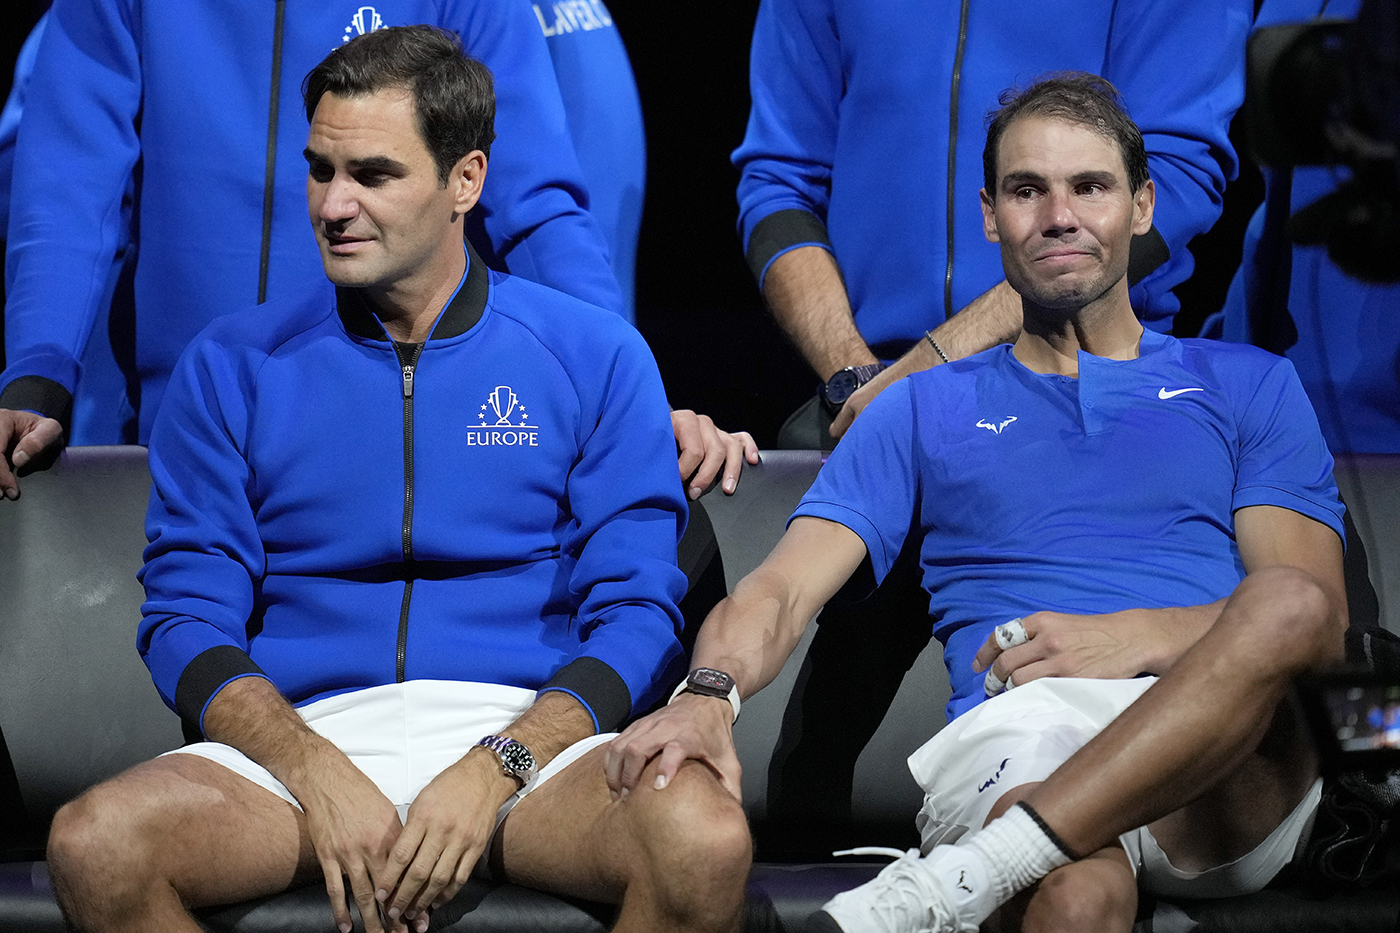 Rafael Nadal Makes Roger Federer Preference Strikingly Evident as